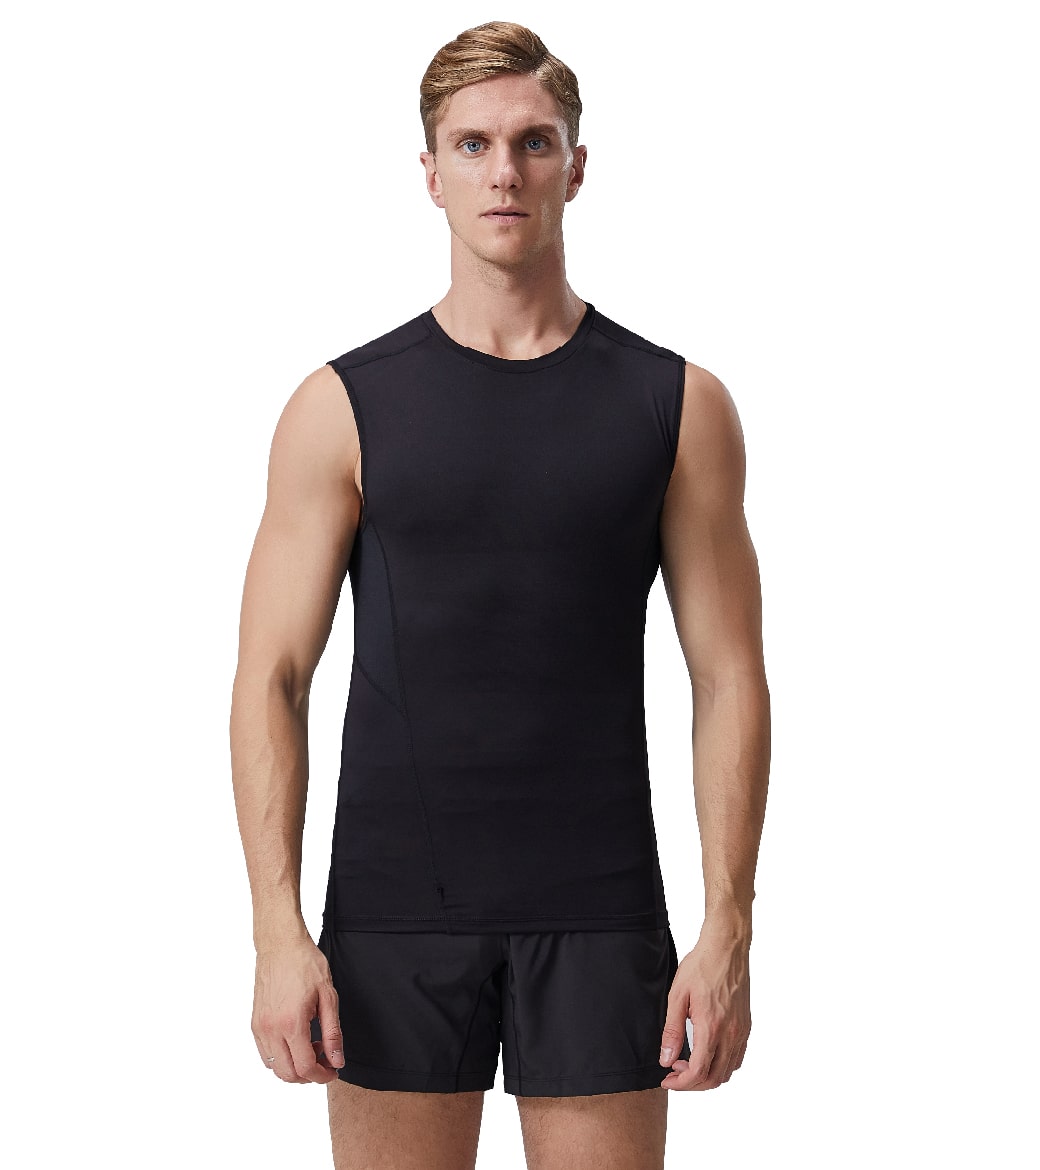 LOVESOFT Men's Casual Quick Dry Sport sleeveless Vest